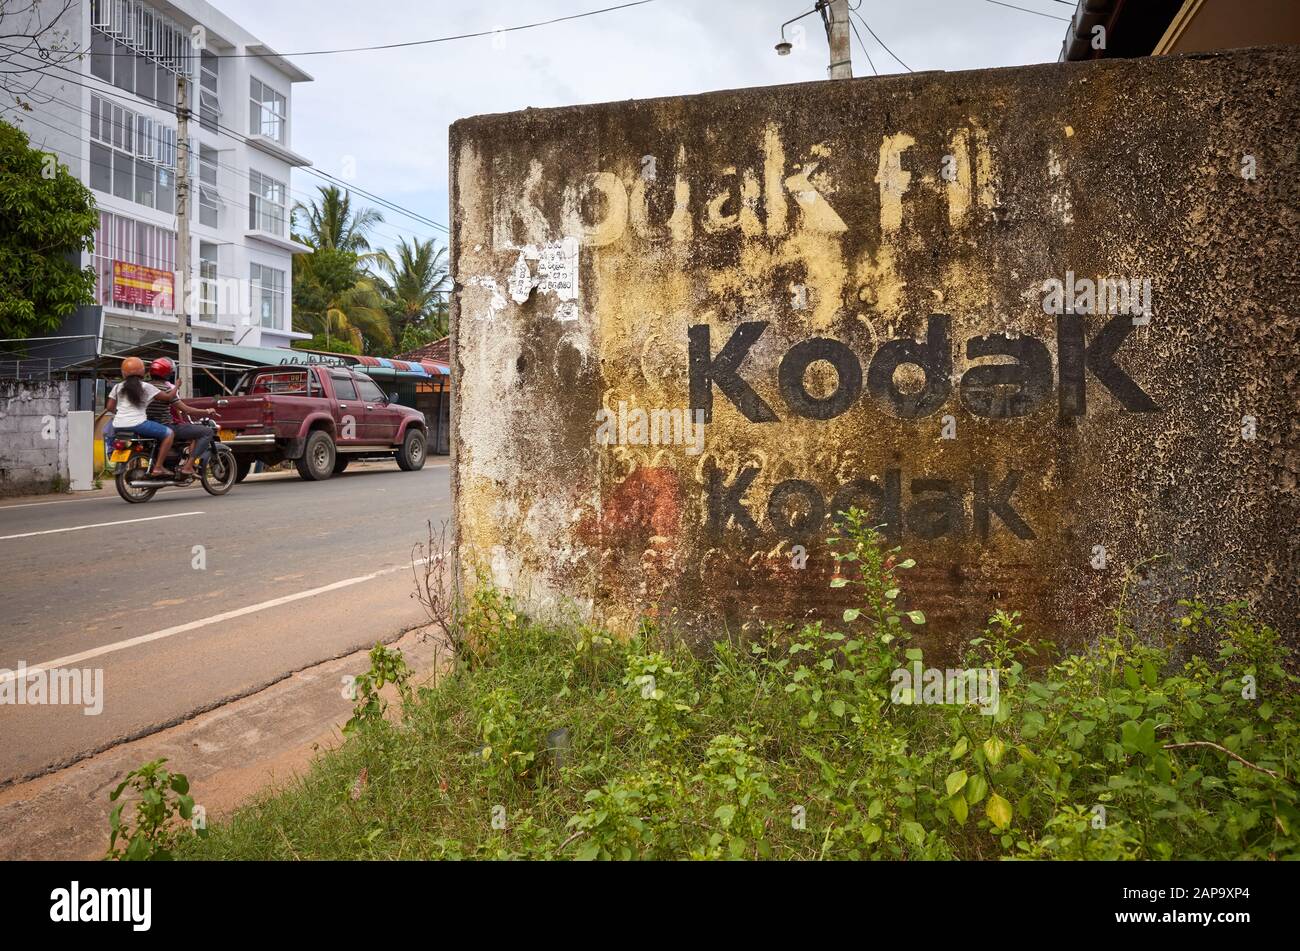 Tangalle, Sri Lanka: December 26, 2019: Peeling Kodak advertisement painting on an old building wall at the town main street. Stock Photo